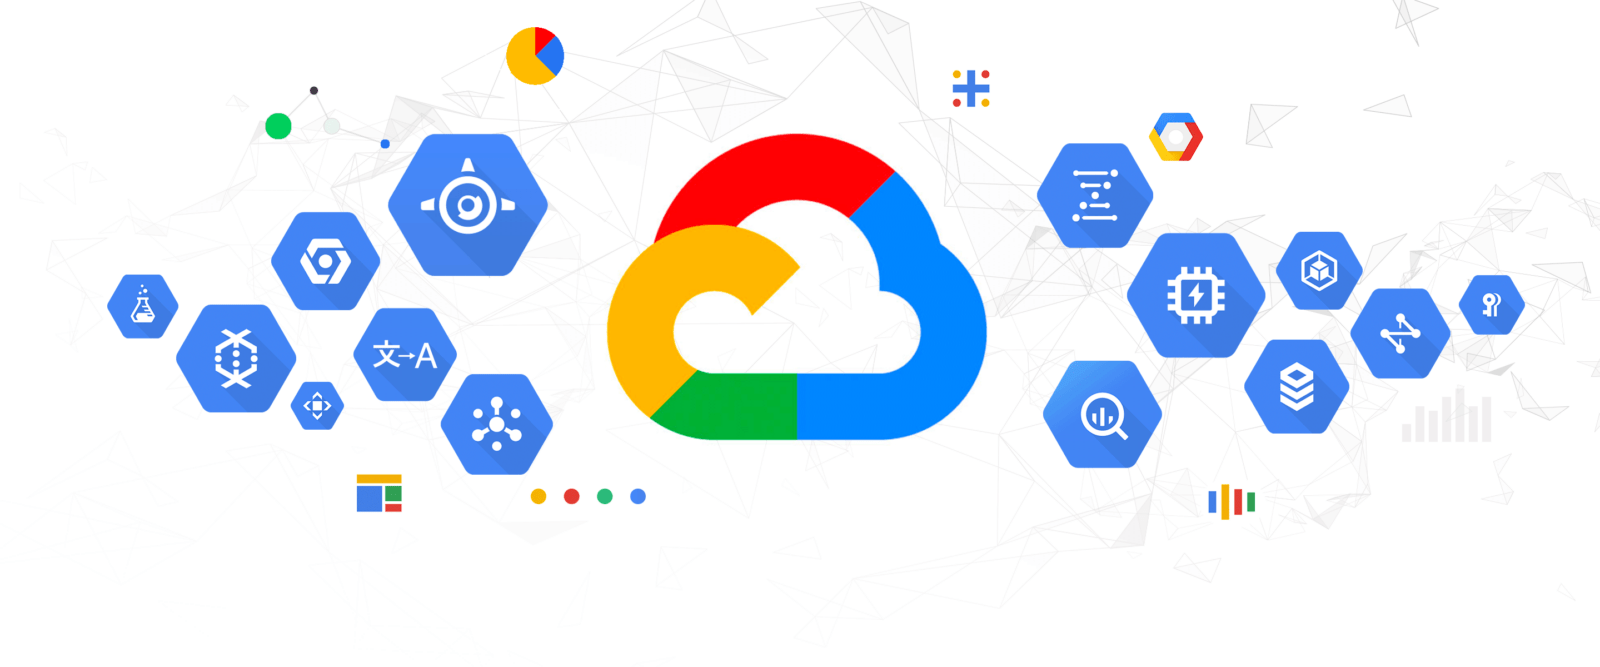 Google Cloud Platform products